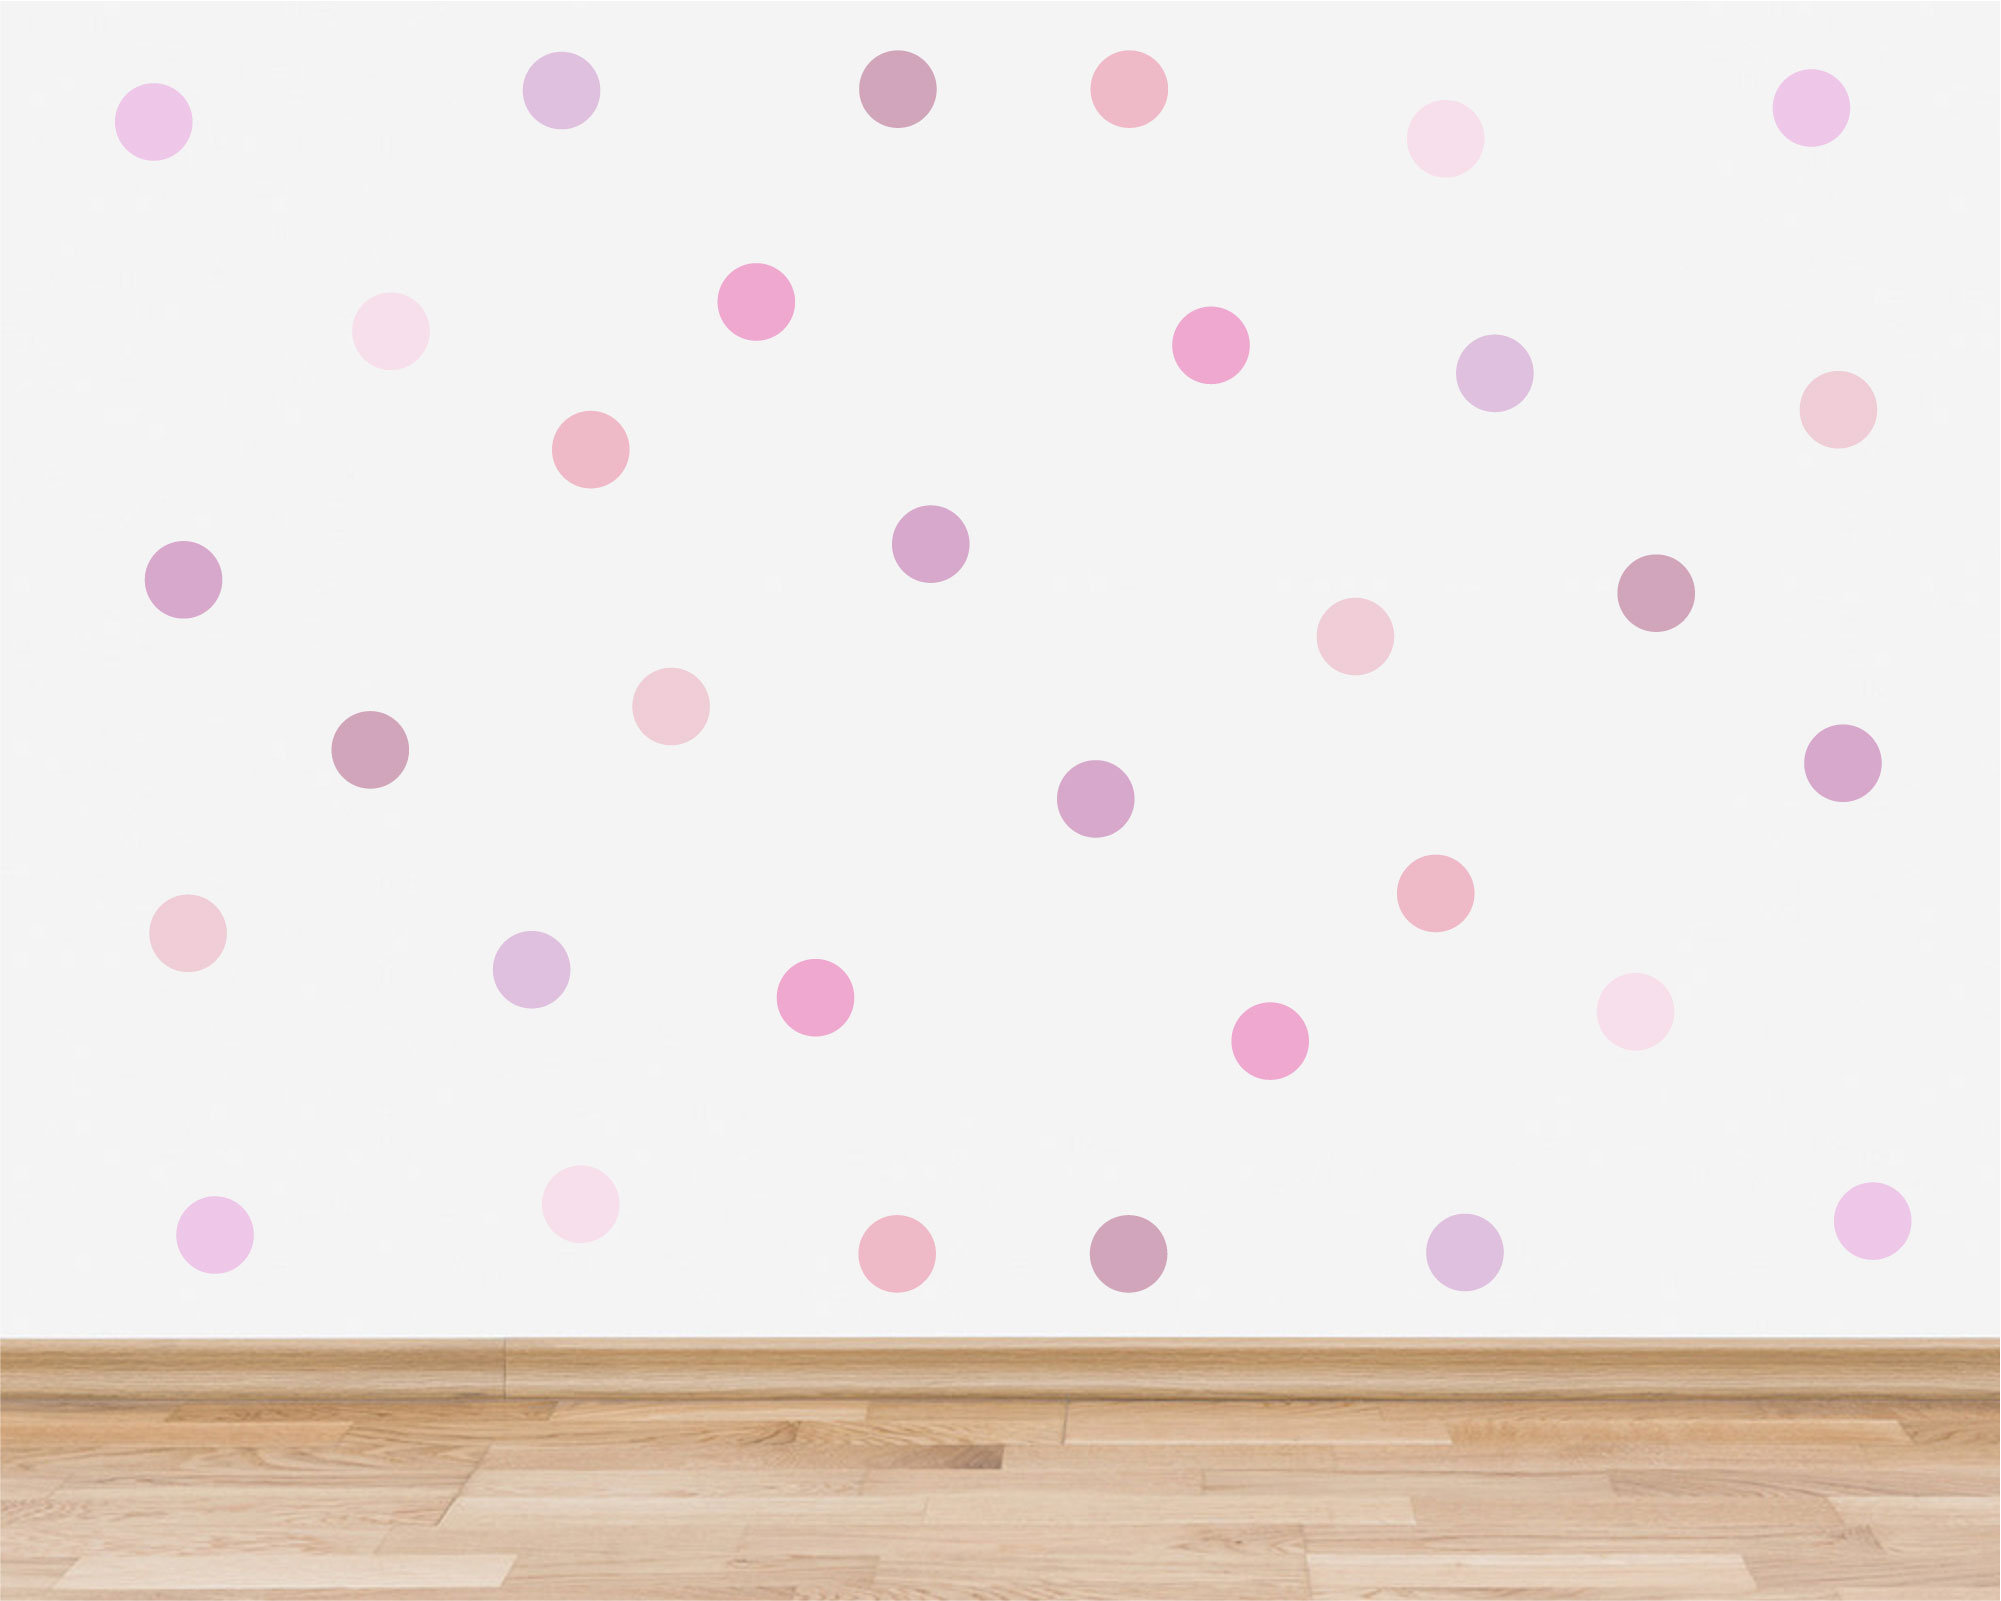 Polka Dot Girls Room Ideas For Walls